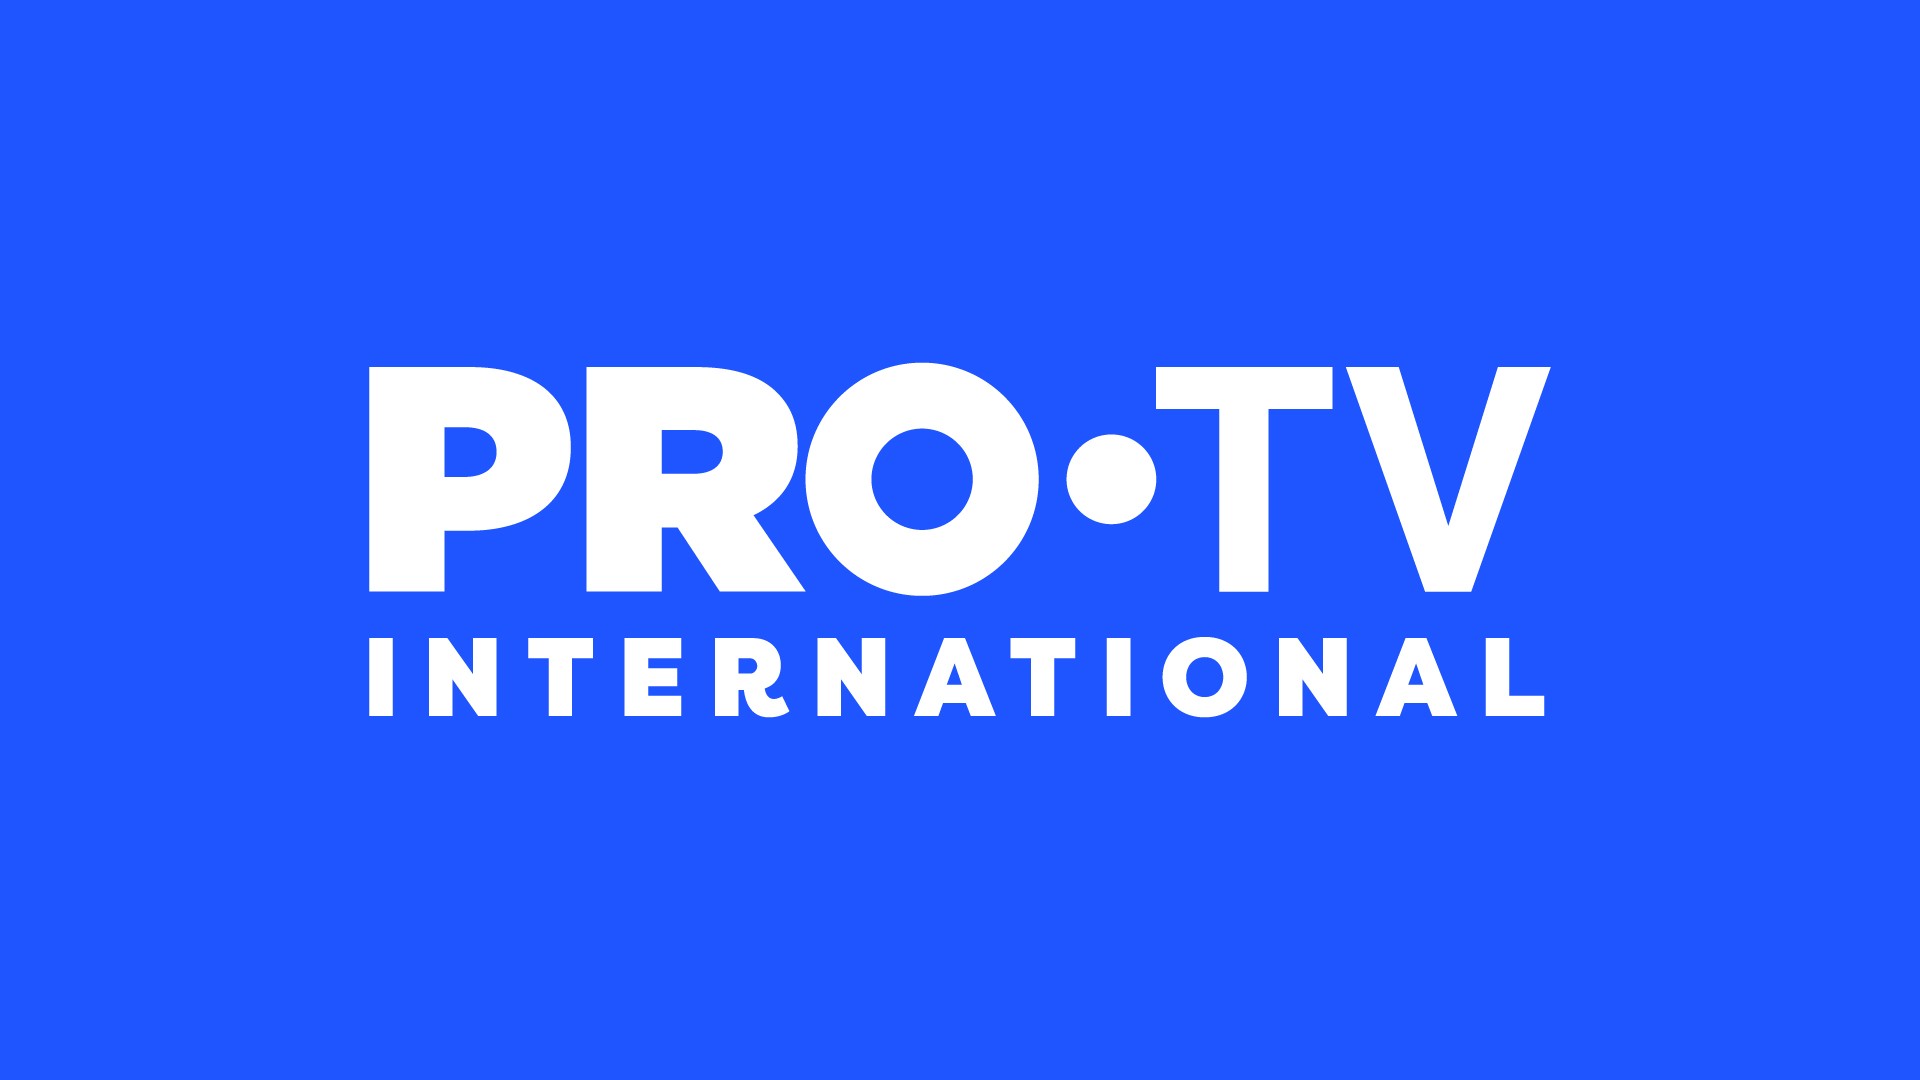 Pro TV International